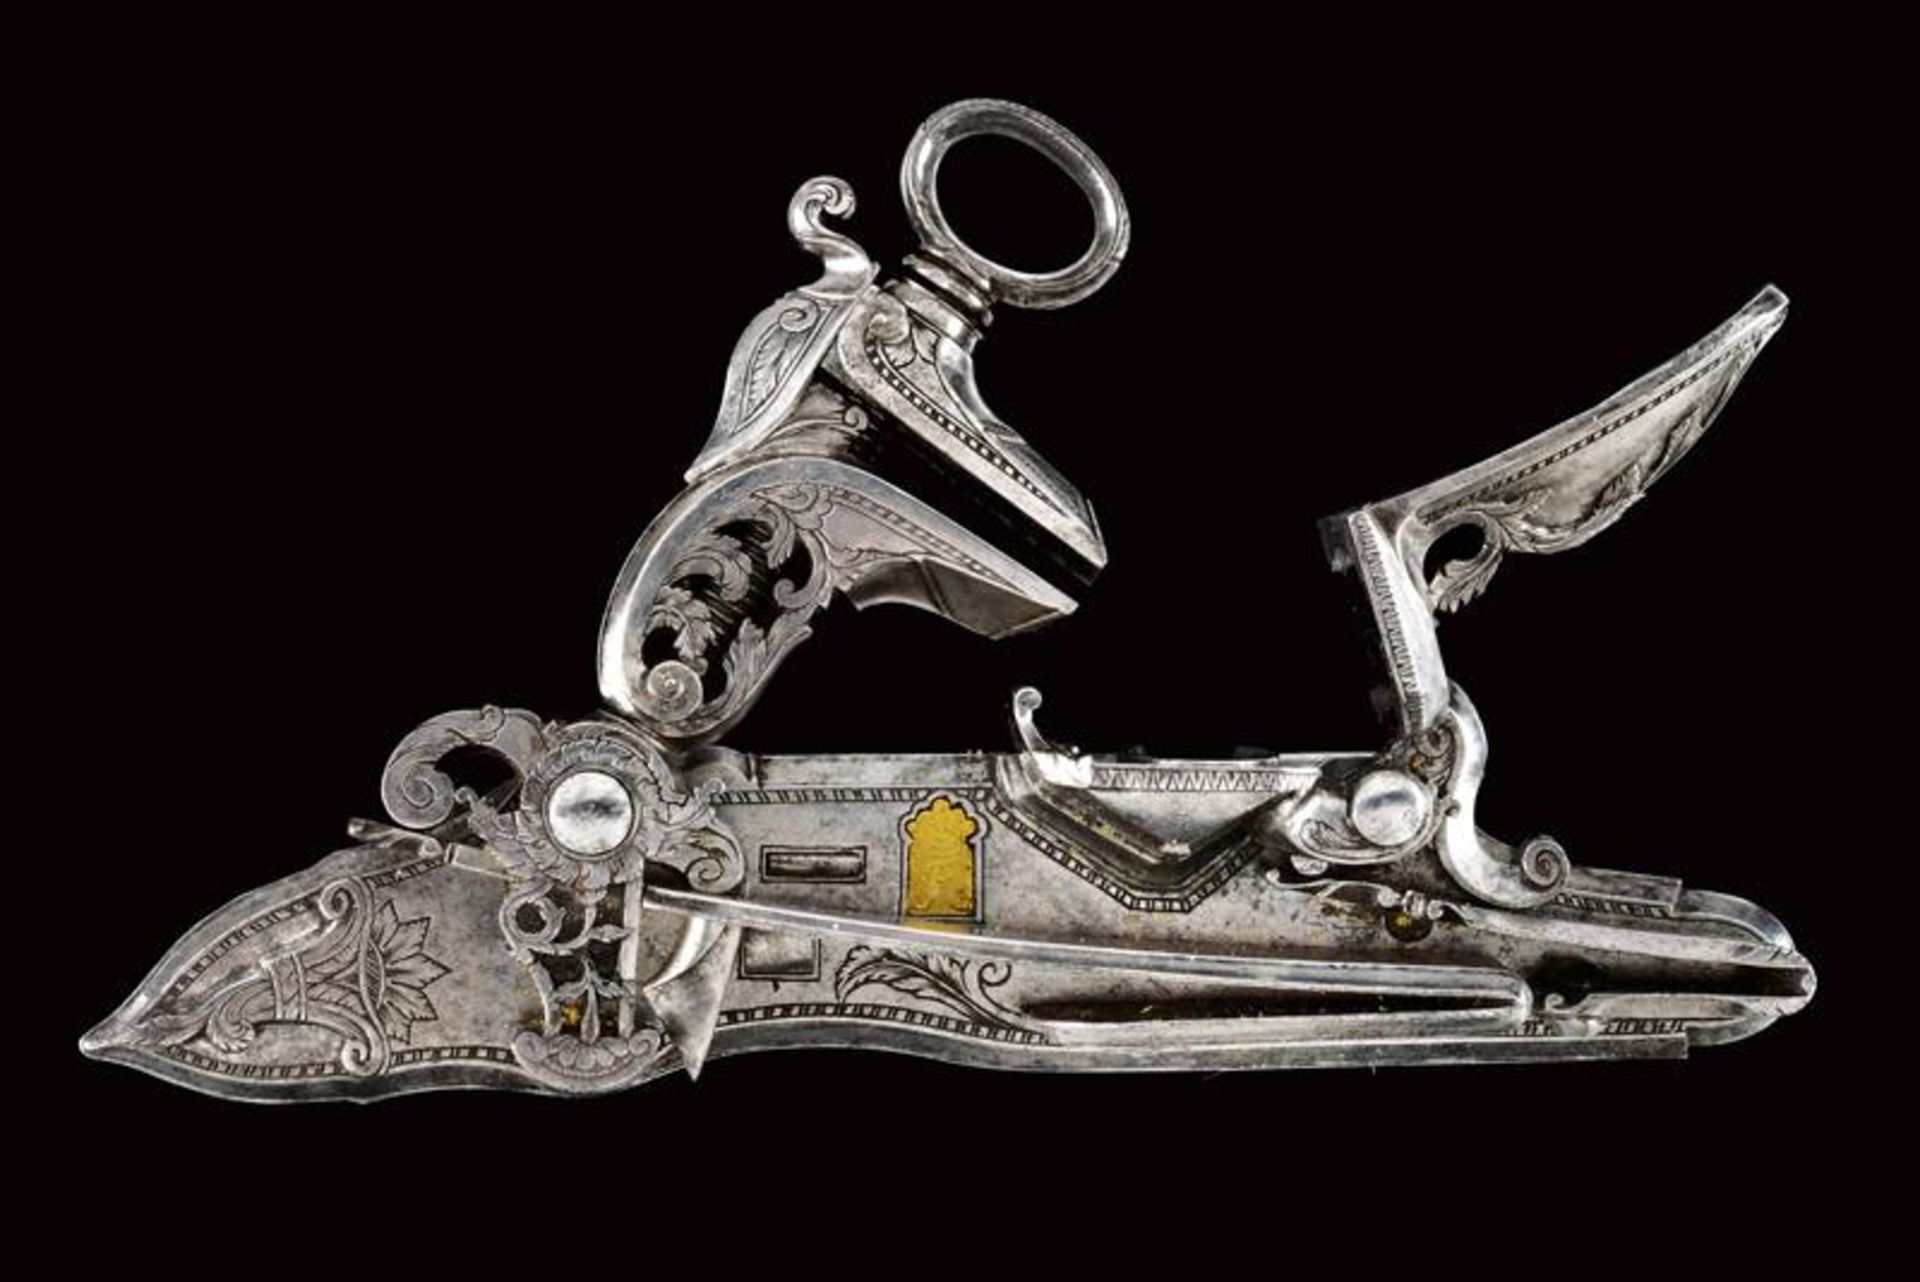 A beautiful miquelet lock by Nicola Salvatore